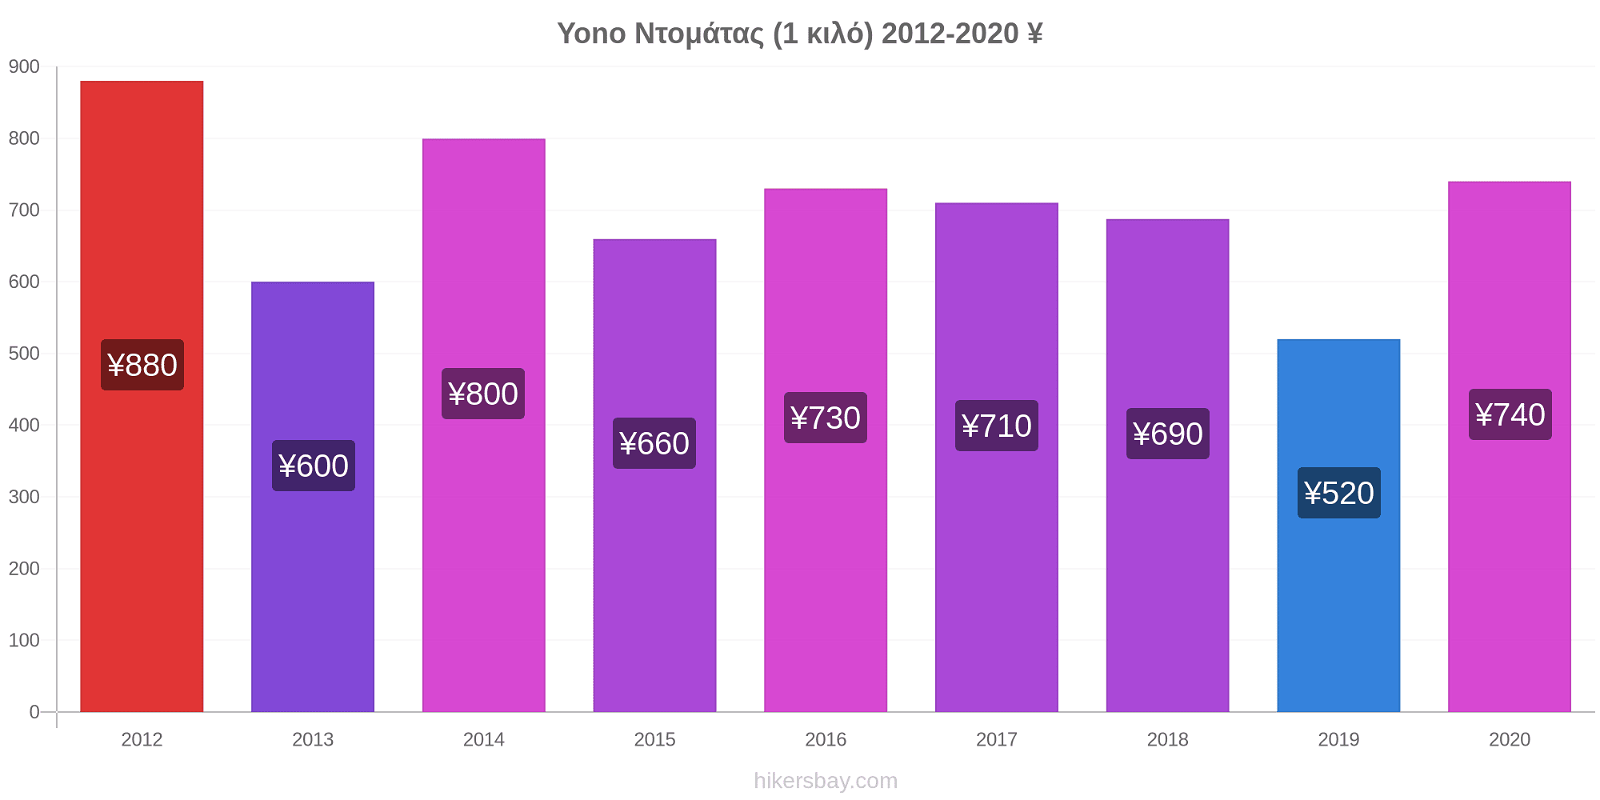 Yono αλλαγές τιμών Ντομάτας (1 κιλό) hikersbay.com